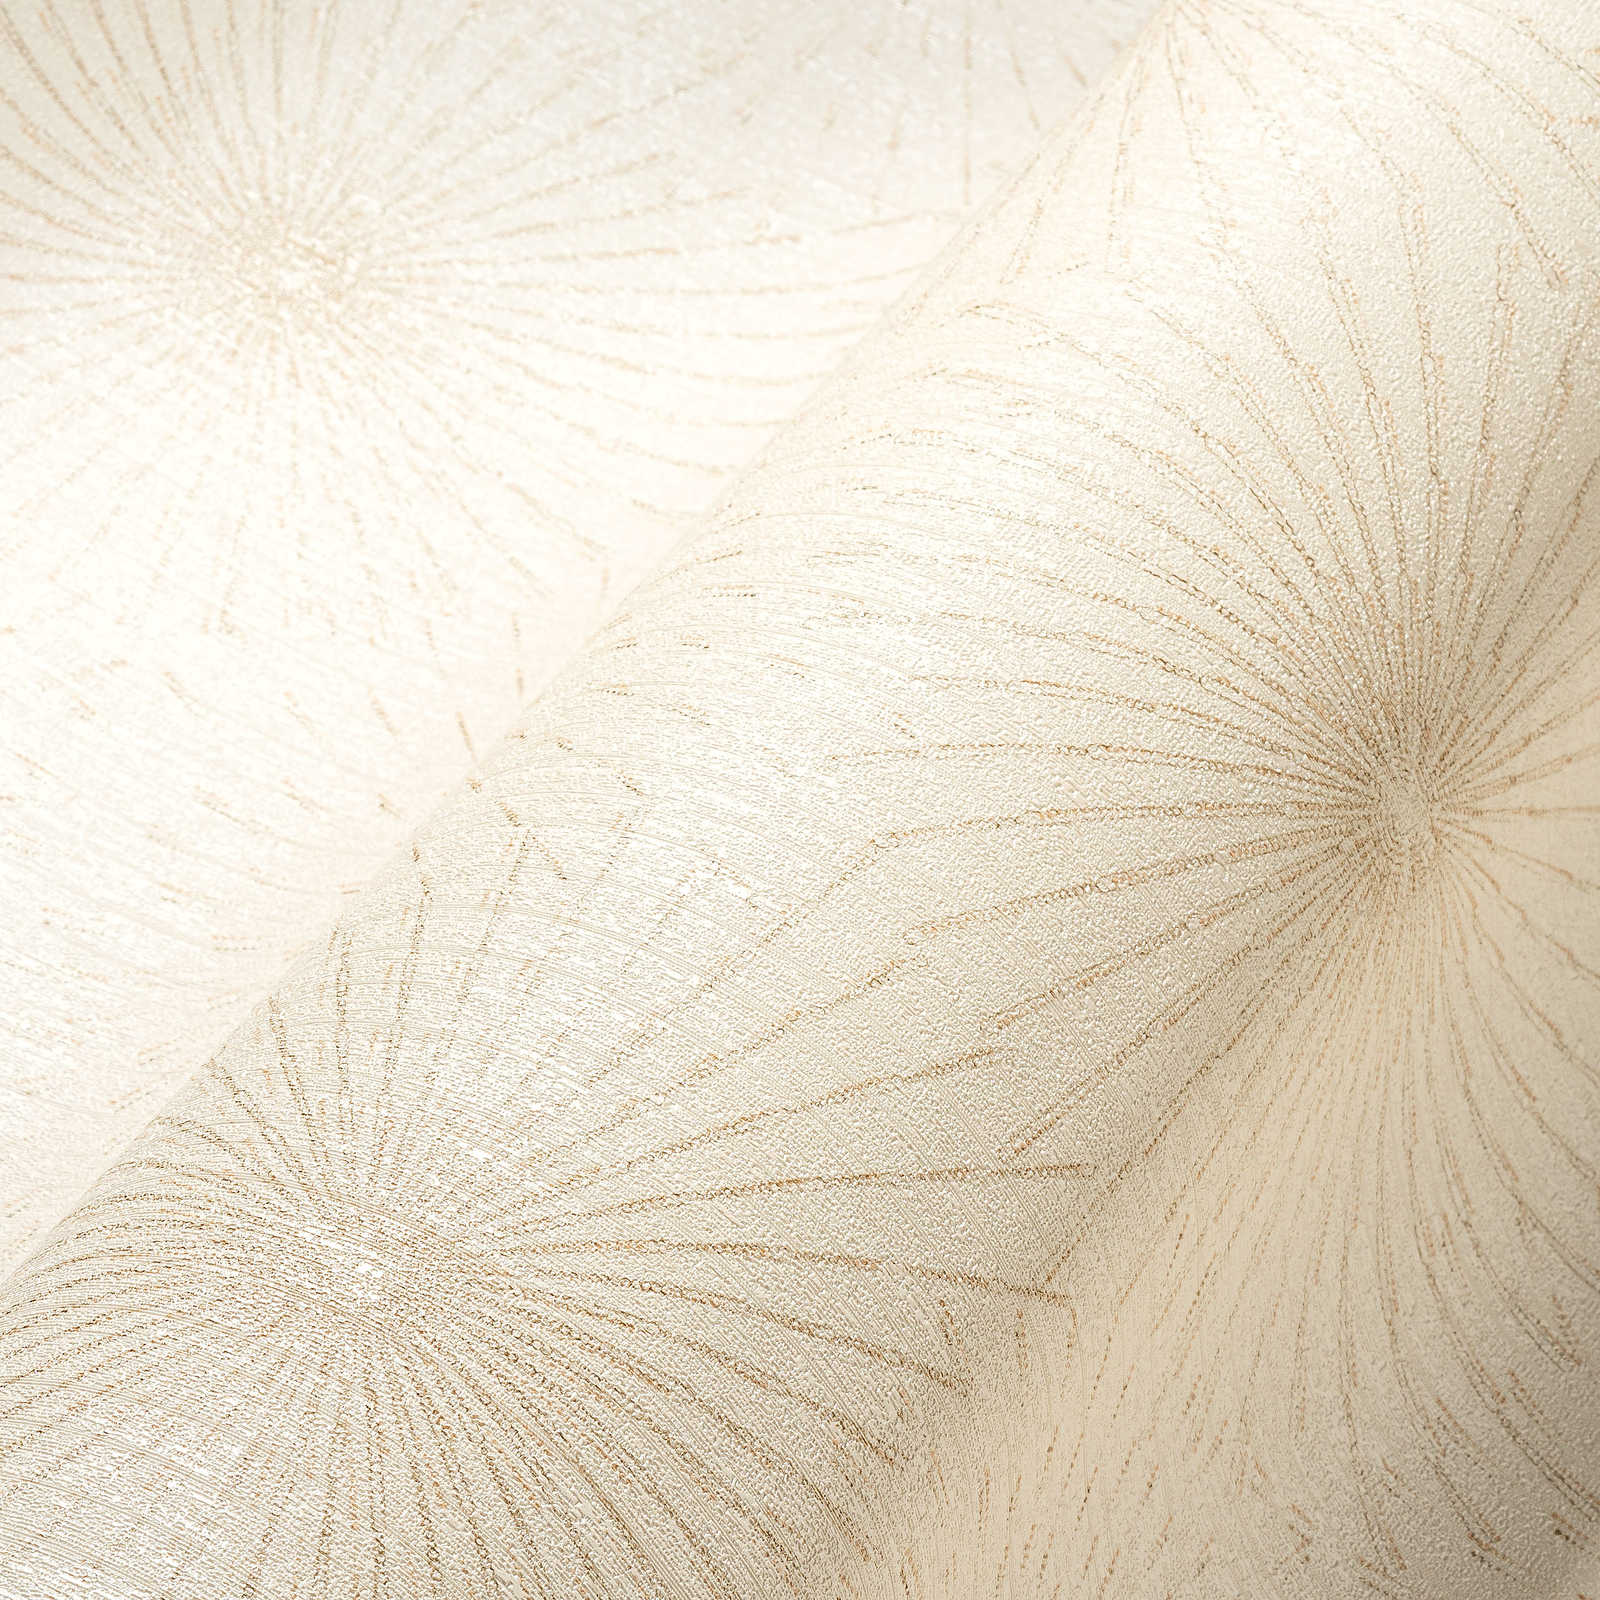             Design wallpaper with 50s retro pattern - cream, metallic
        